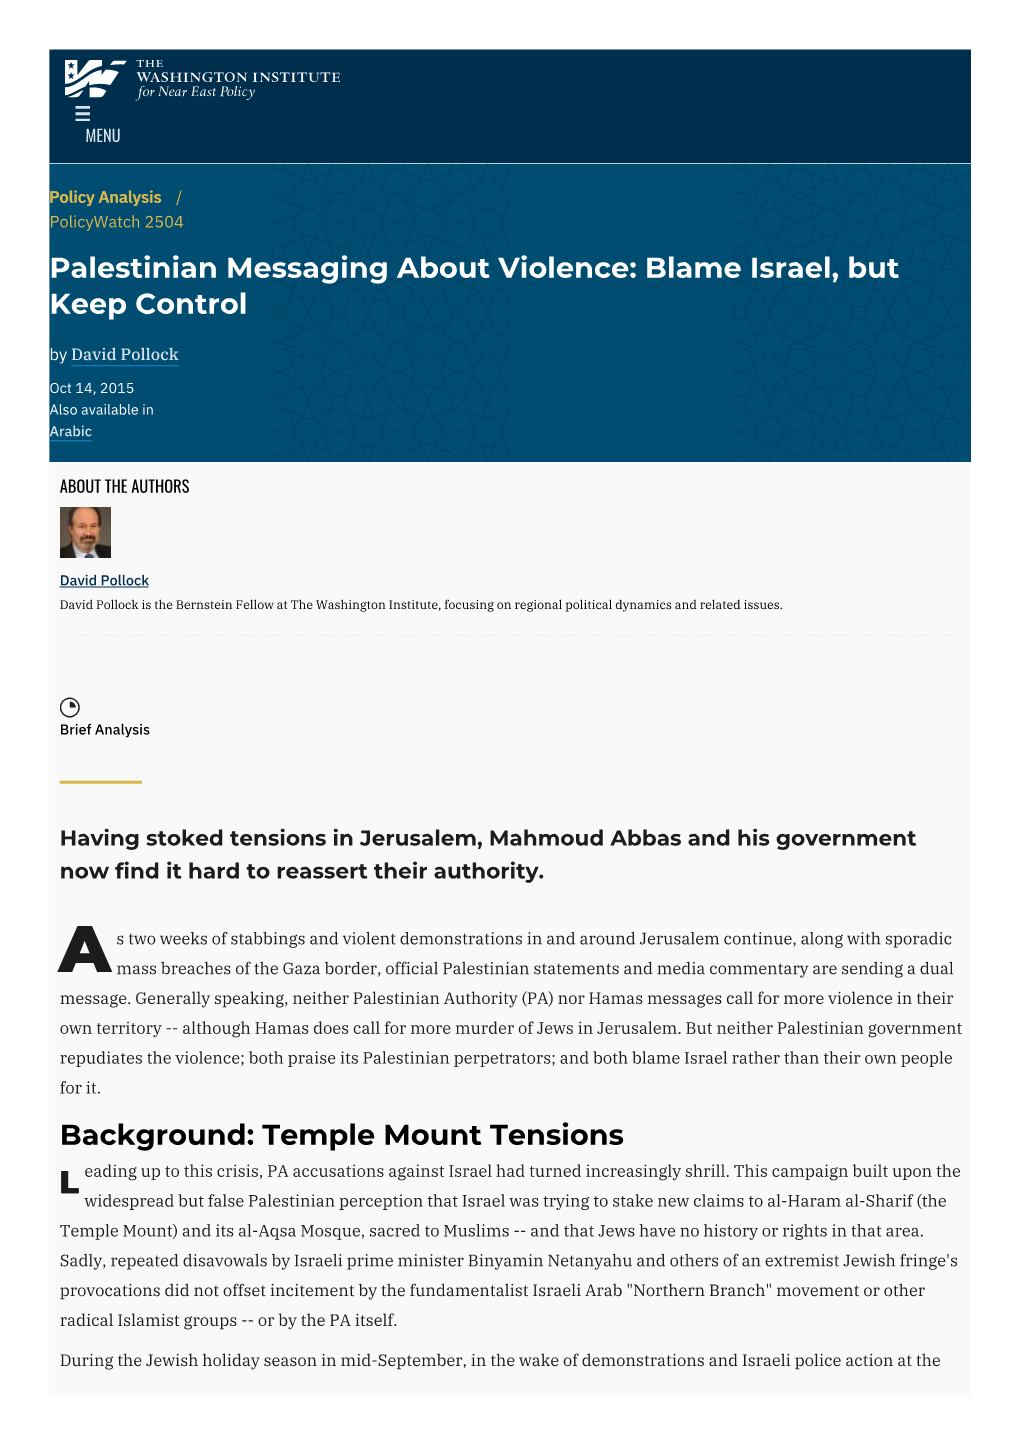 Blame Israel, but Keep Control by David Pollock